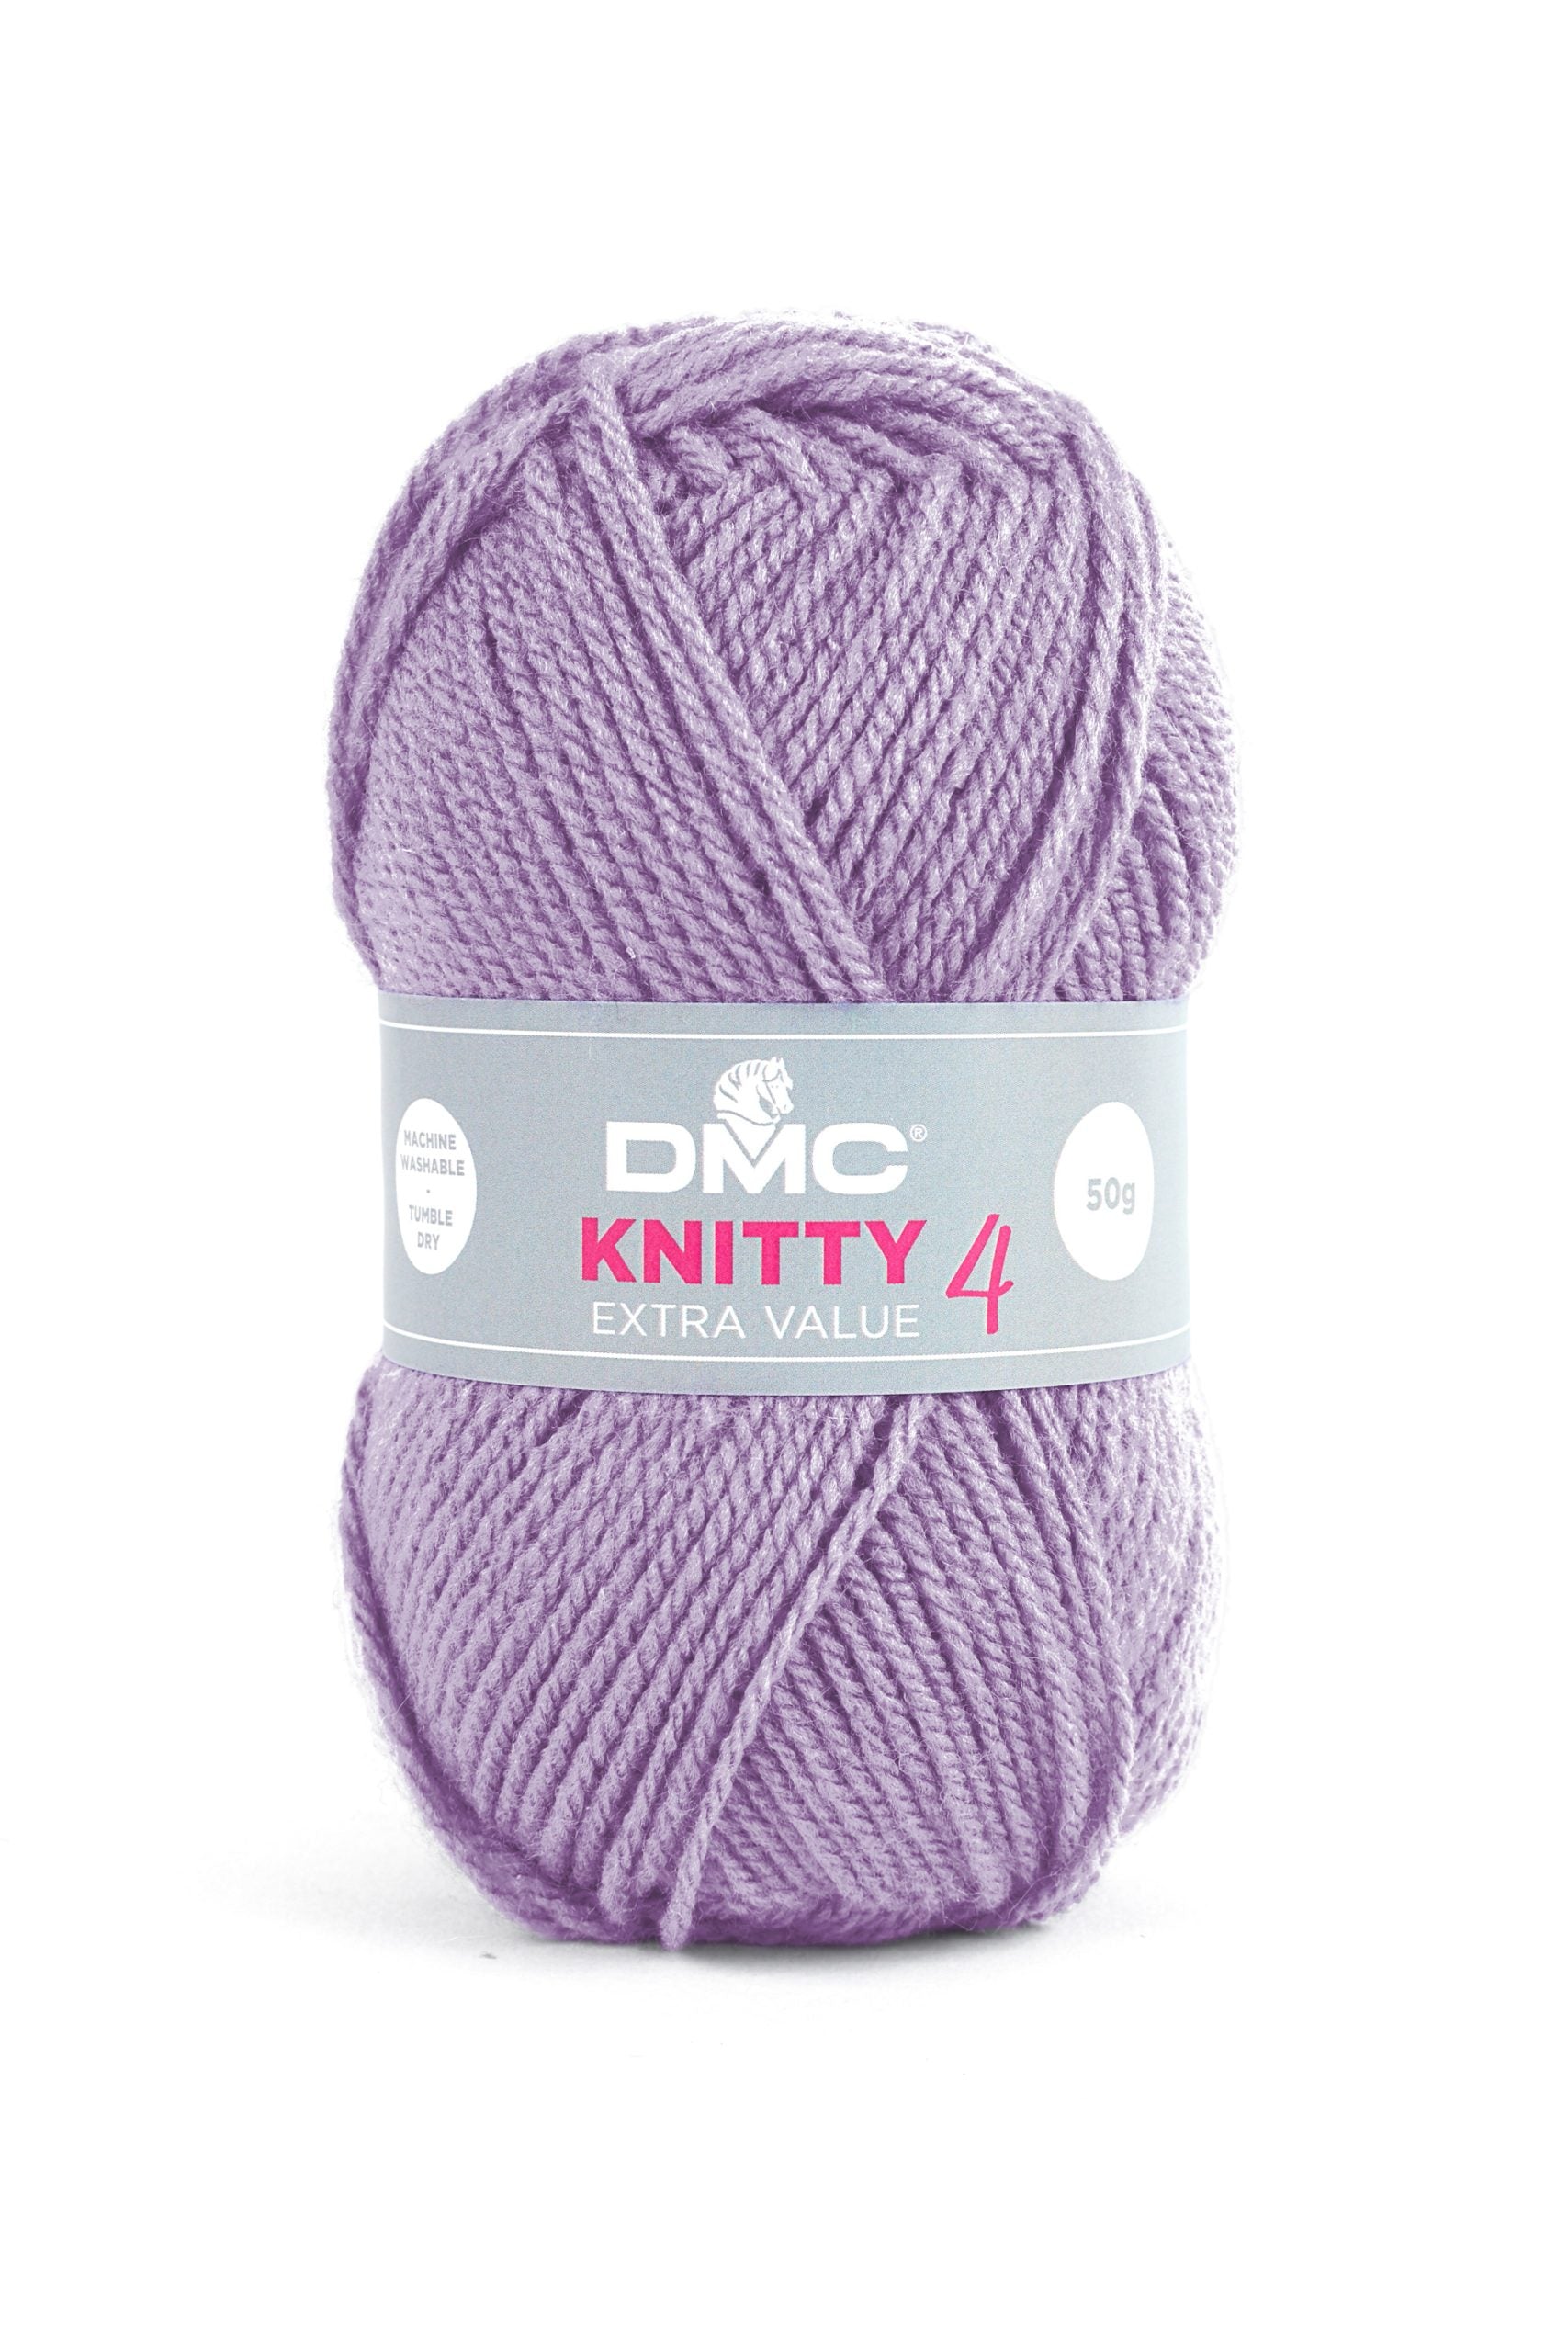 Lana Dmc Knitty 4 Colore 959